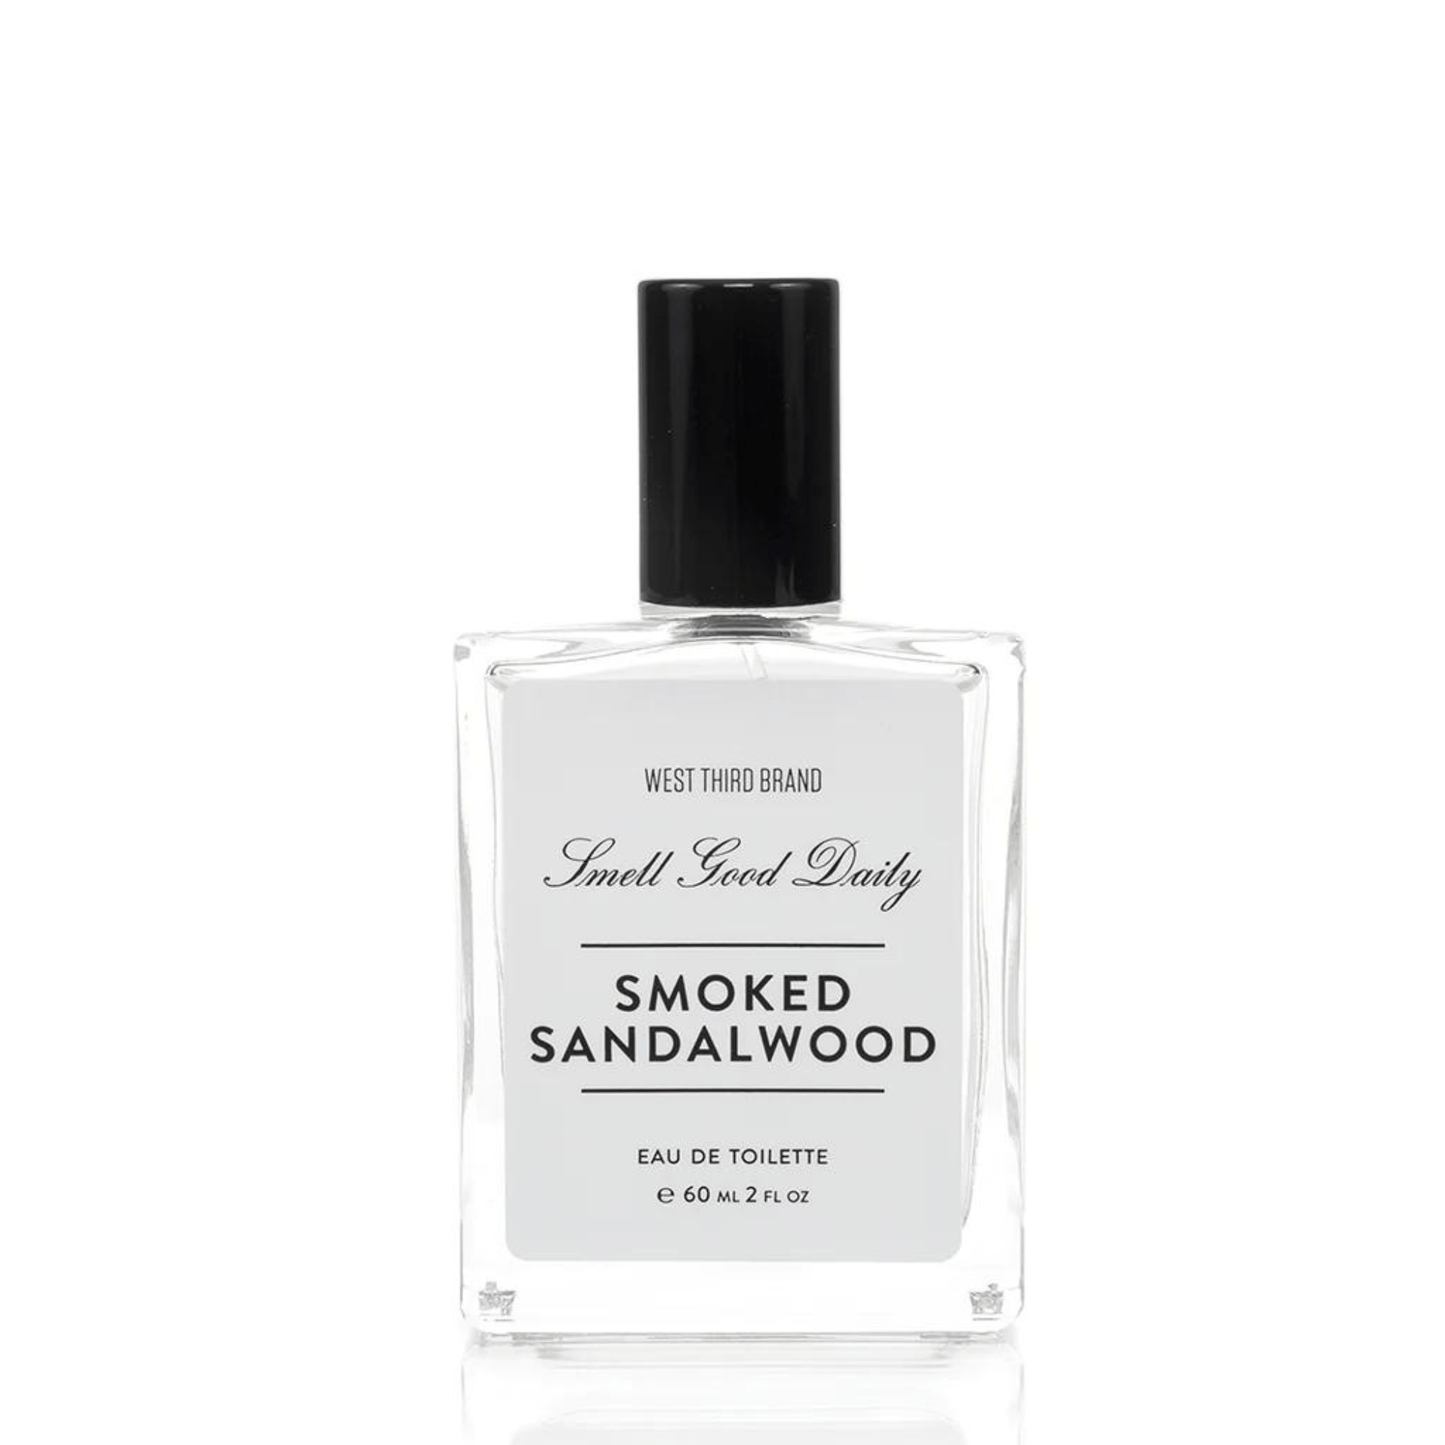 Primary Image of Smoked Sandalwood EDT